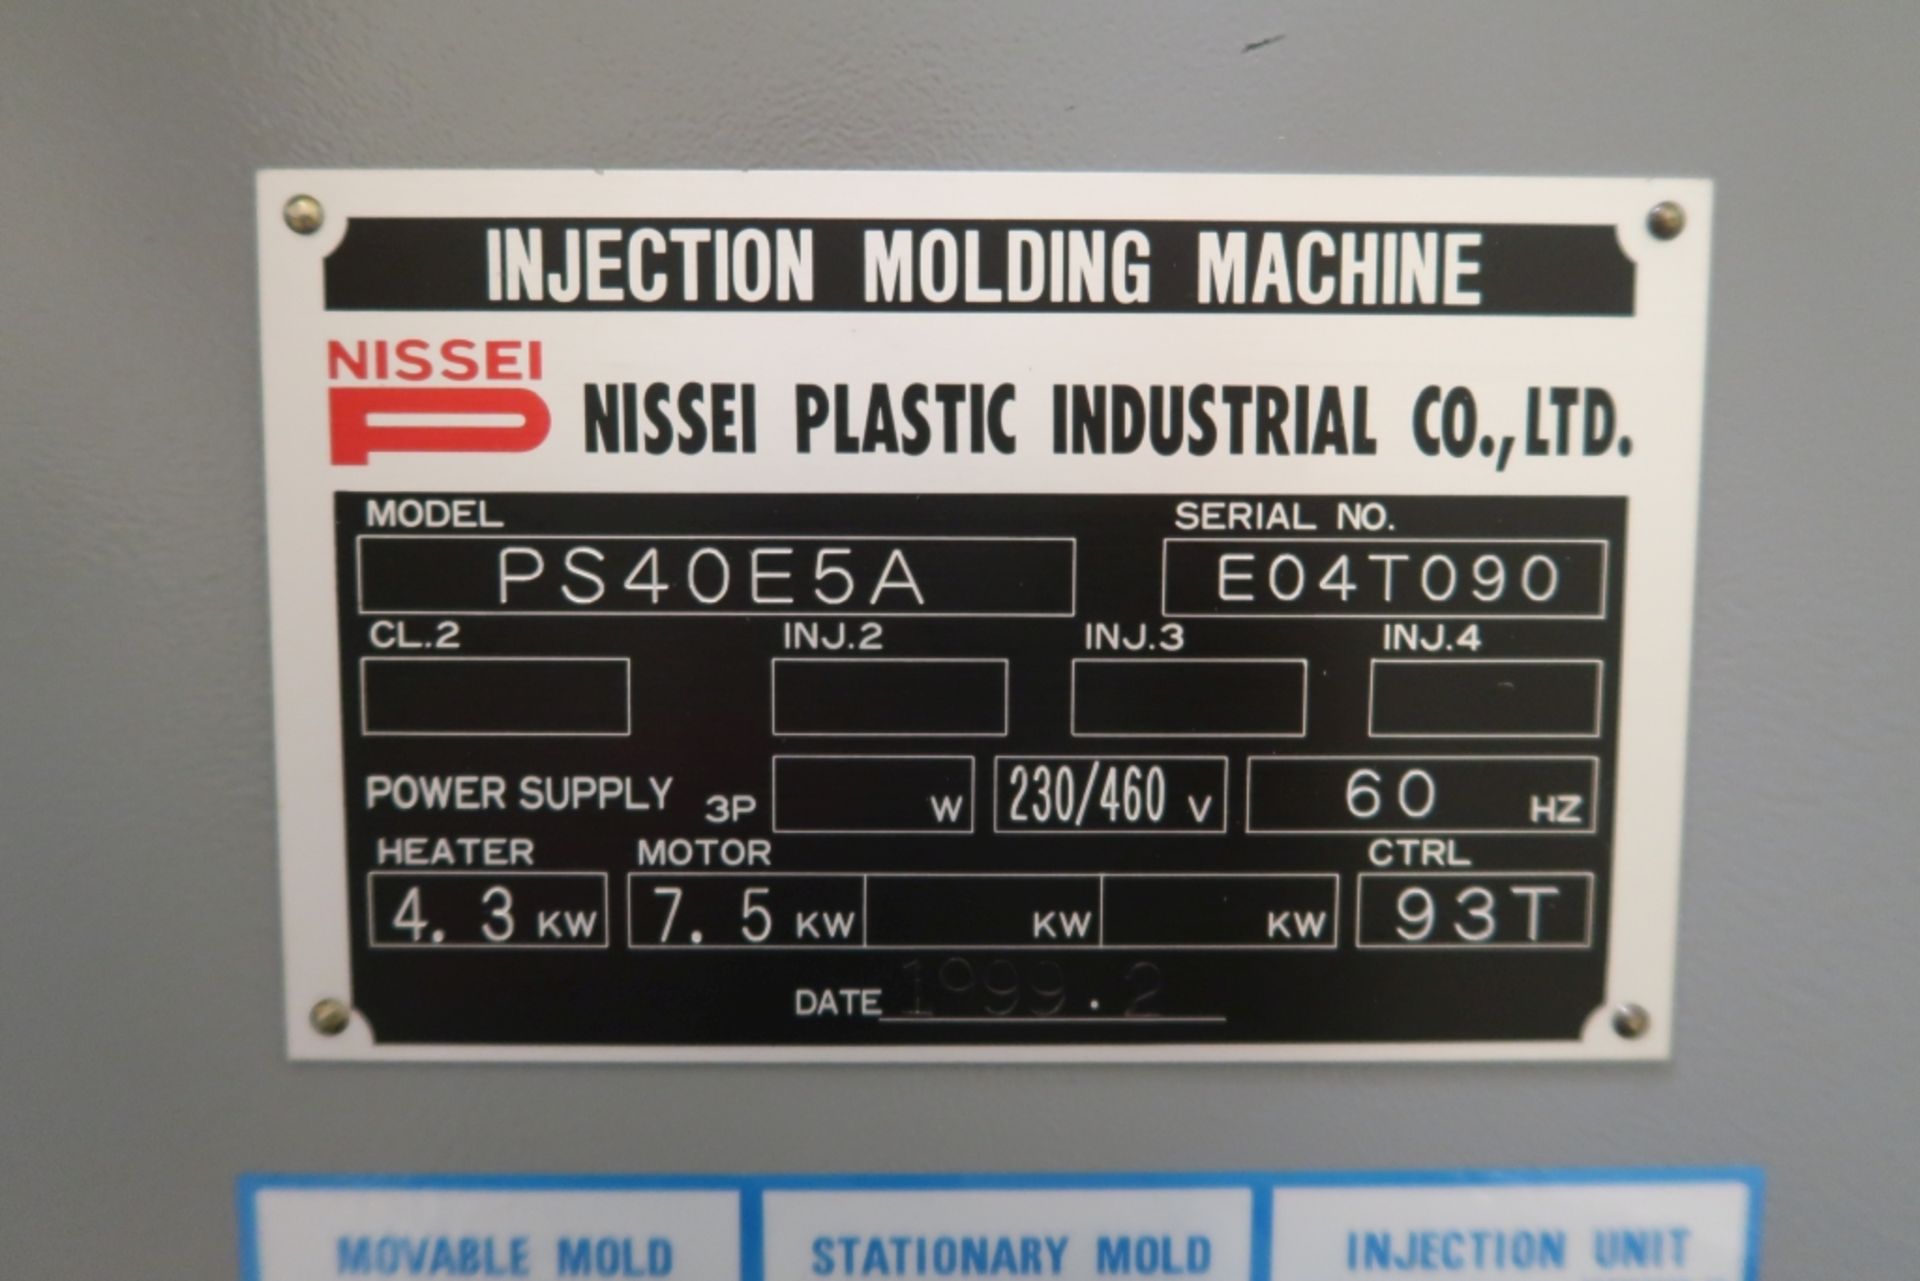 NISSEI INJECTION MOLDING MACHINE MOD: PS40E5A, (1999), SN: E04T090, 230/460V 3PH - Image 7 of 9